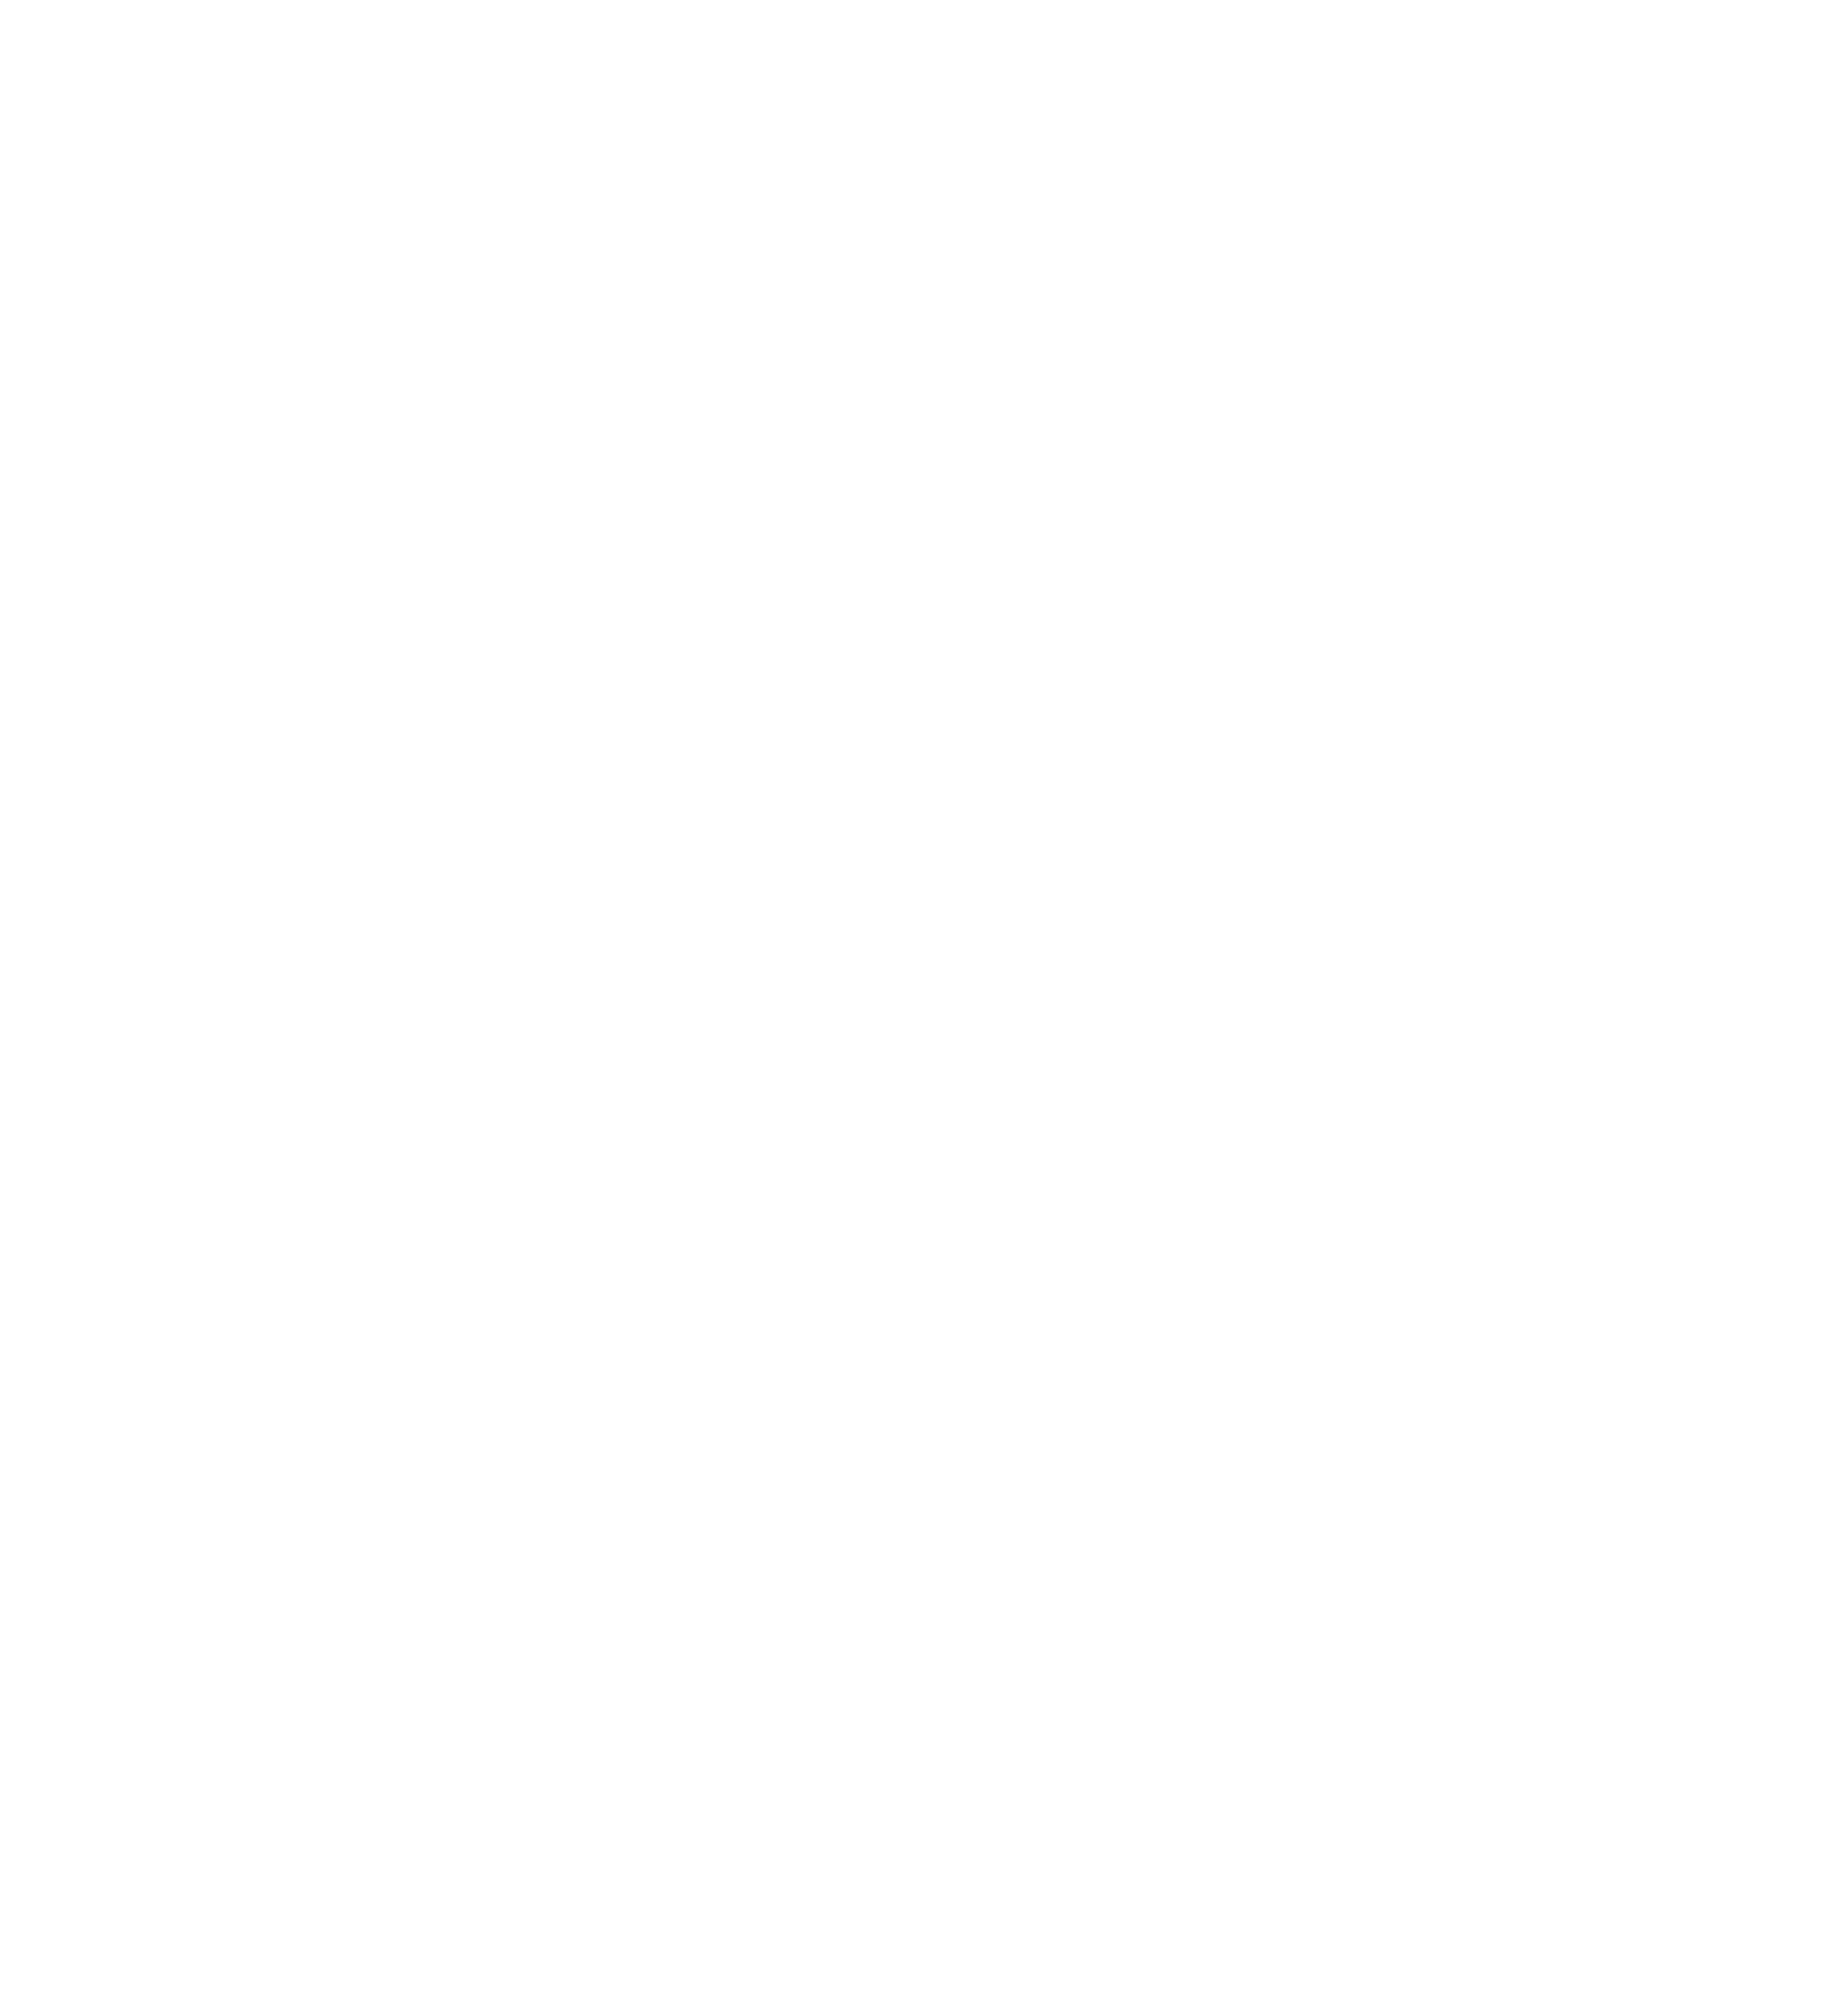 IVORY resort and spa logo